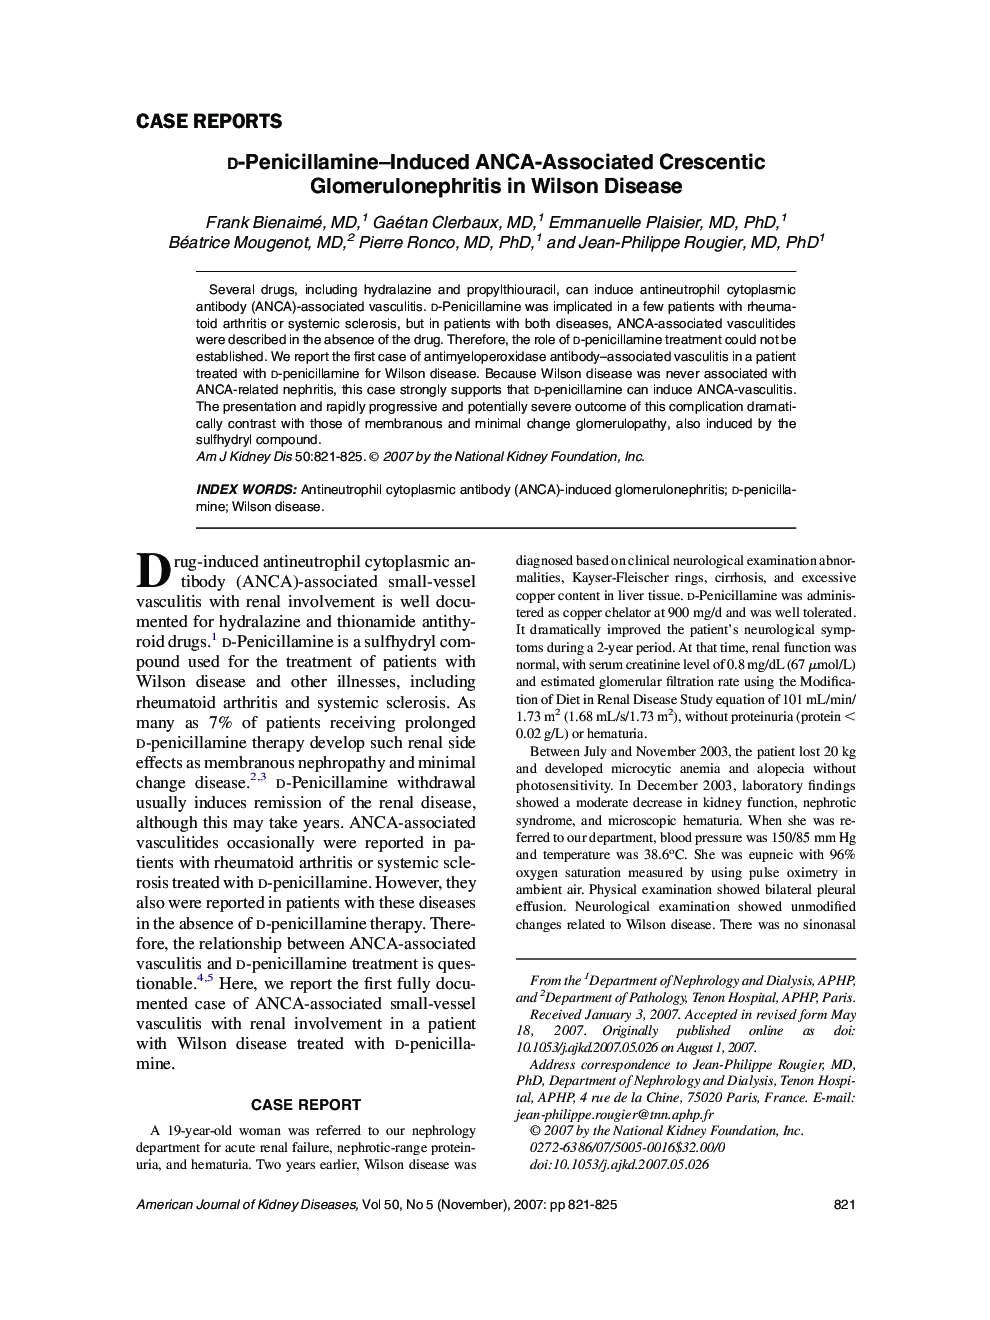 d-Penicillamine-Induced ANCA-Associated Crescentic Glomerulonephritis in Wilson Disease